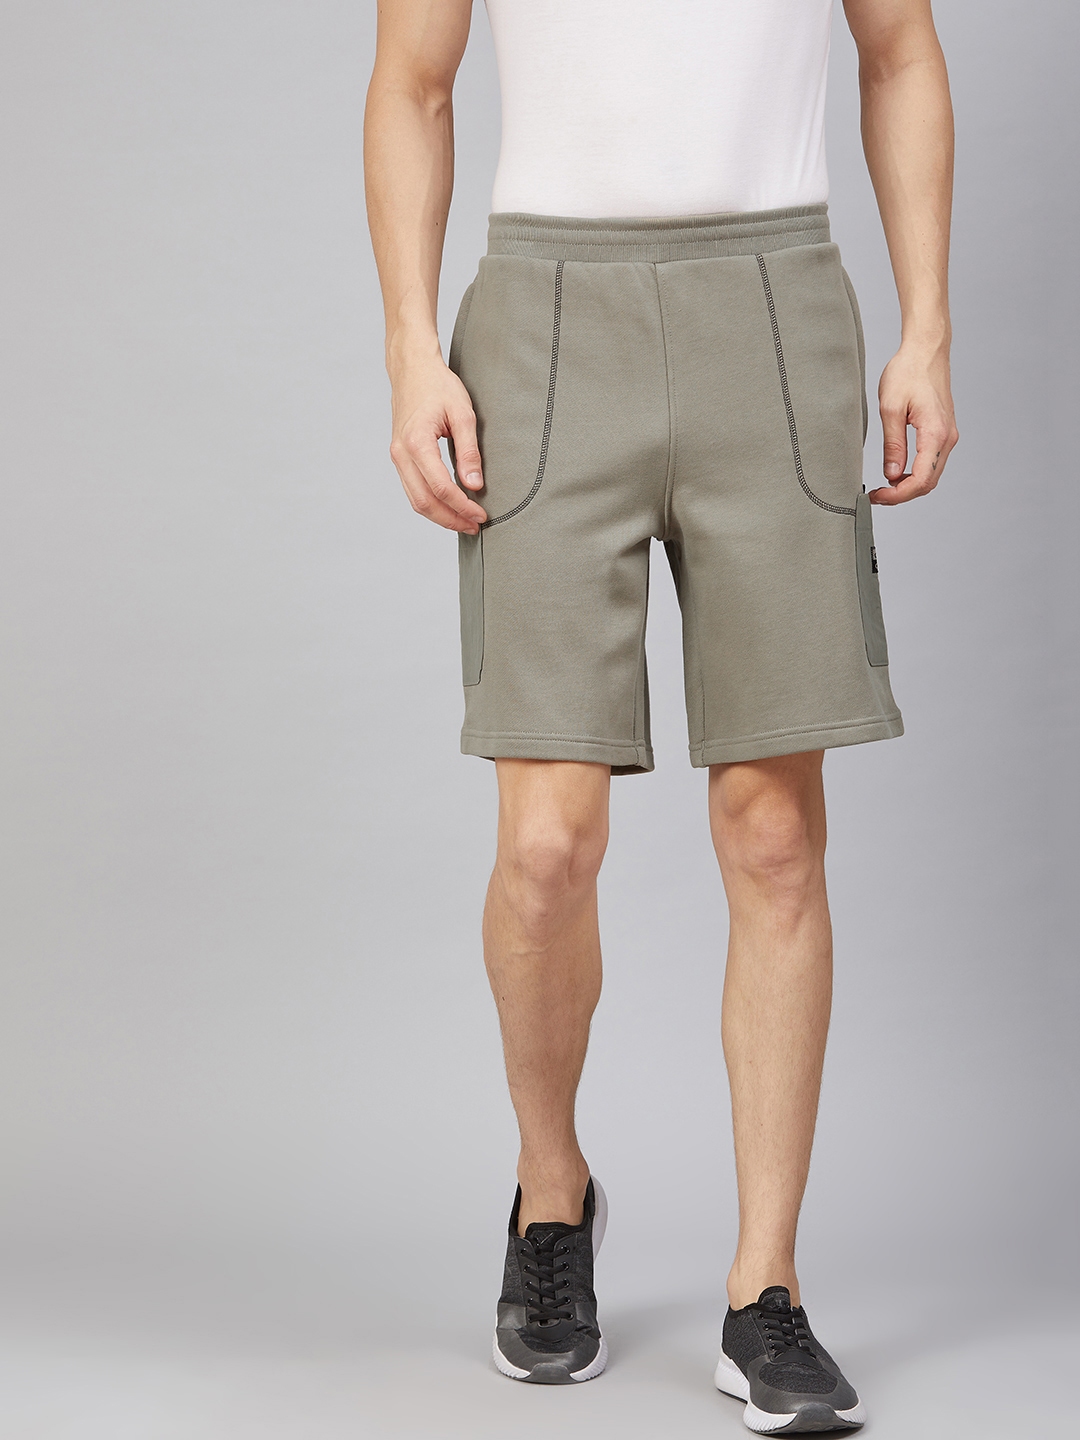 Buy ADIDAS Originals Men Taupe Solid D Shorts - Shorts for Men 12620454 ...